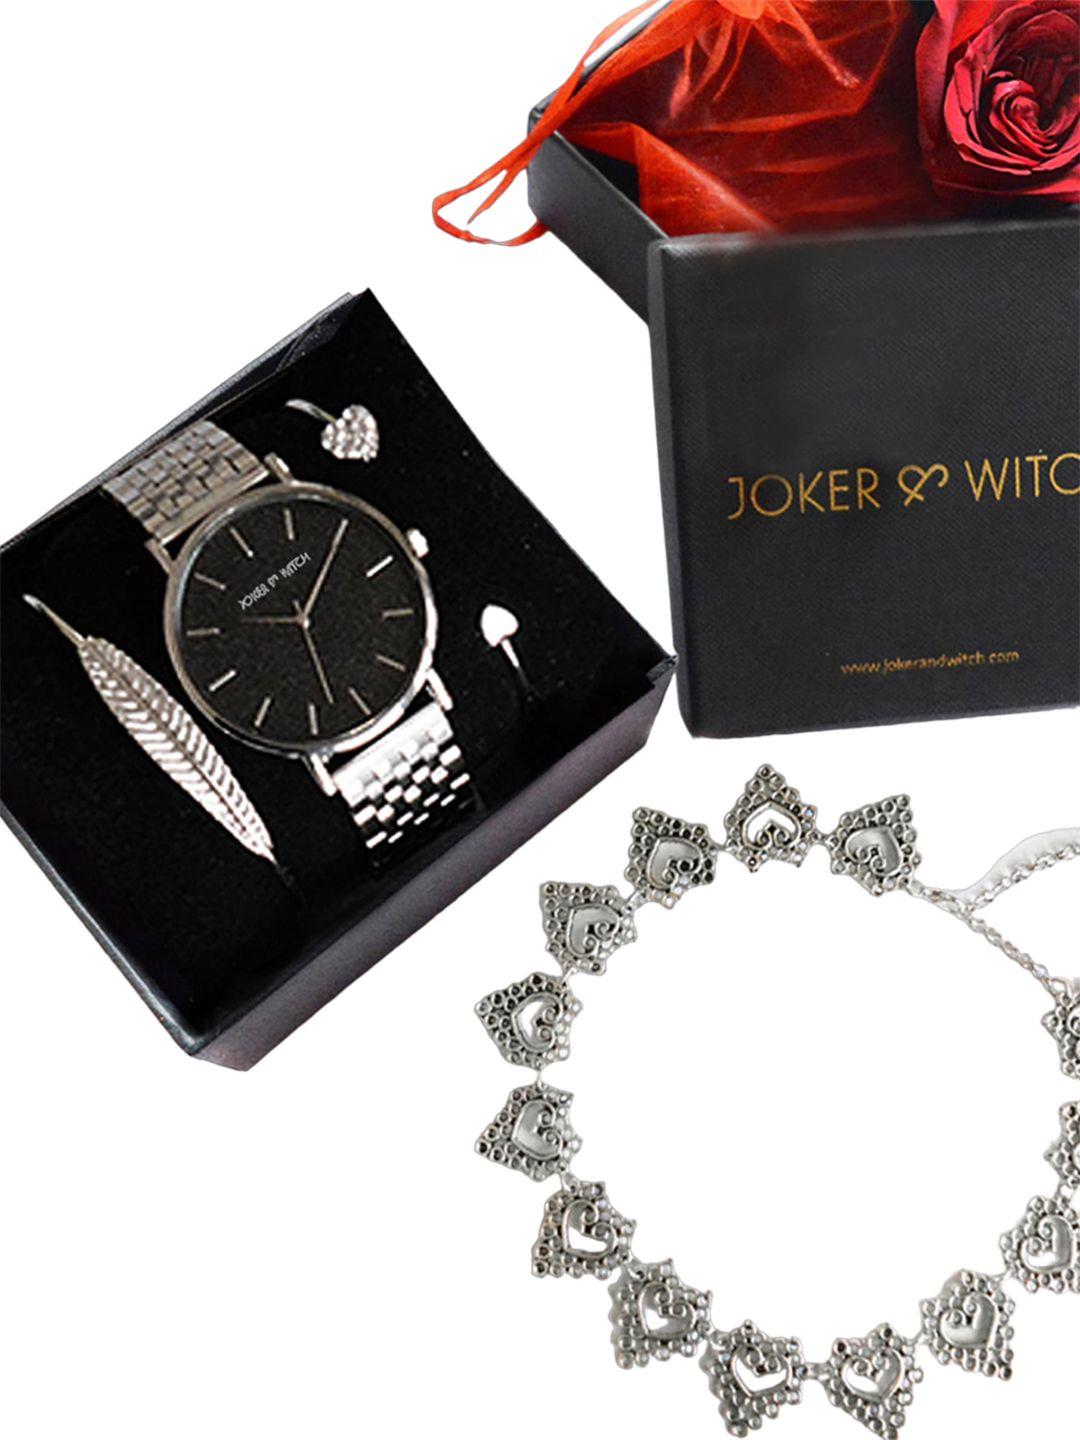 joker & witch women analogue watch gift set jwls04